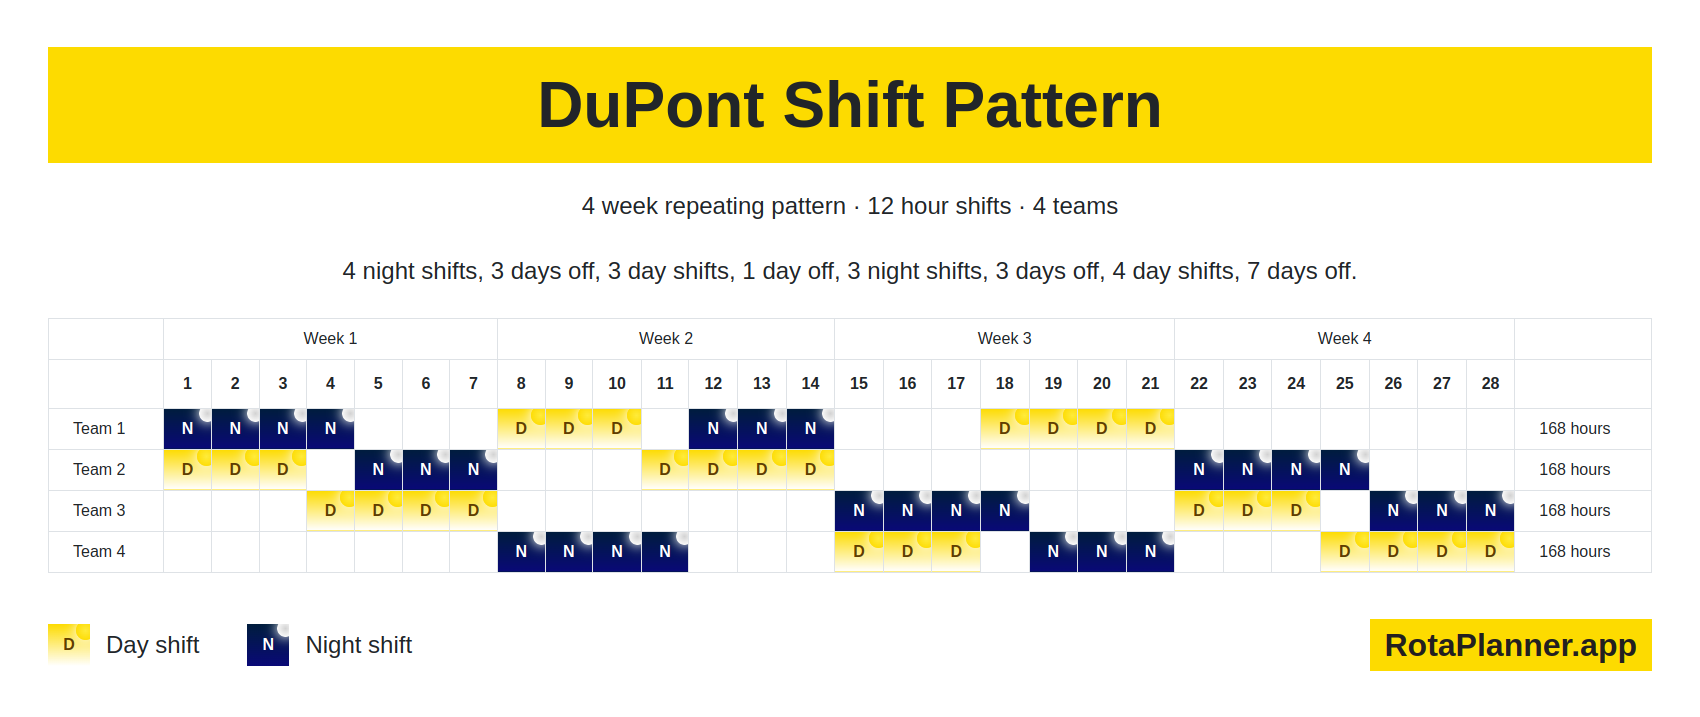 DuPont Shift Pattern